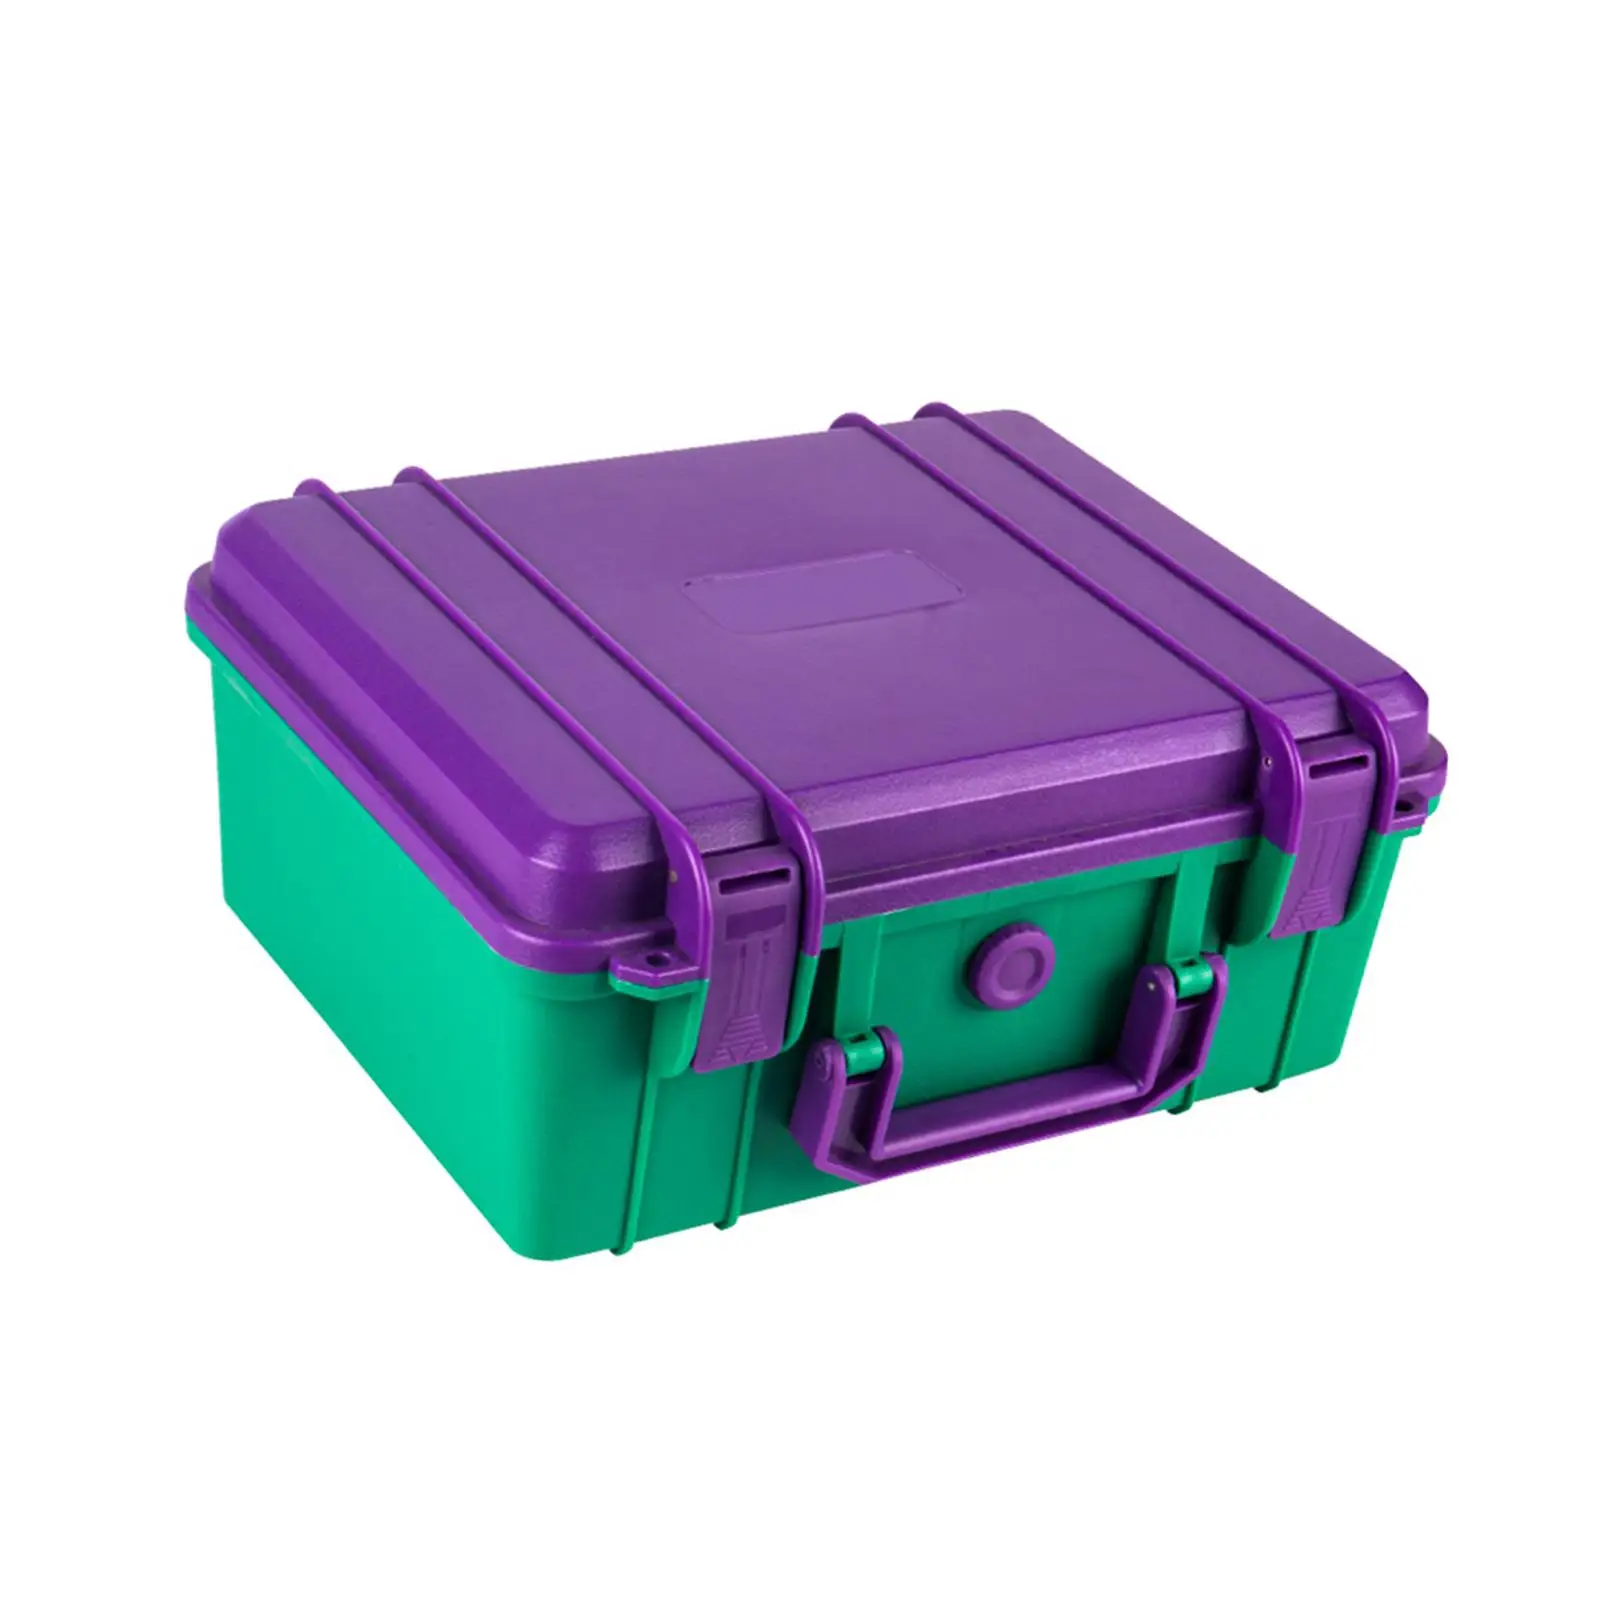 Hardware Storage Case Portable Organization Hardware Equipment Storage Violet and Green 280x240x130mm Organizer Protective Case